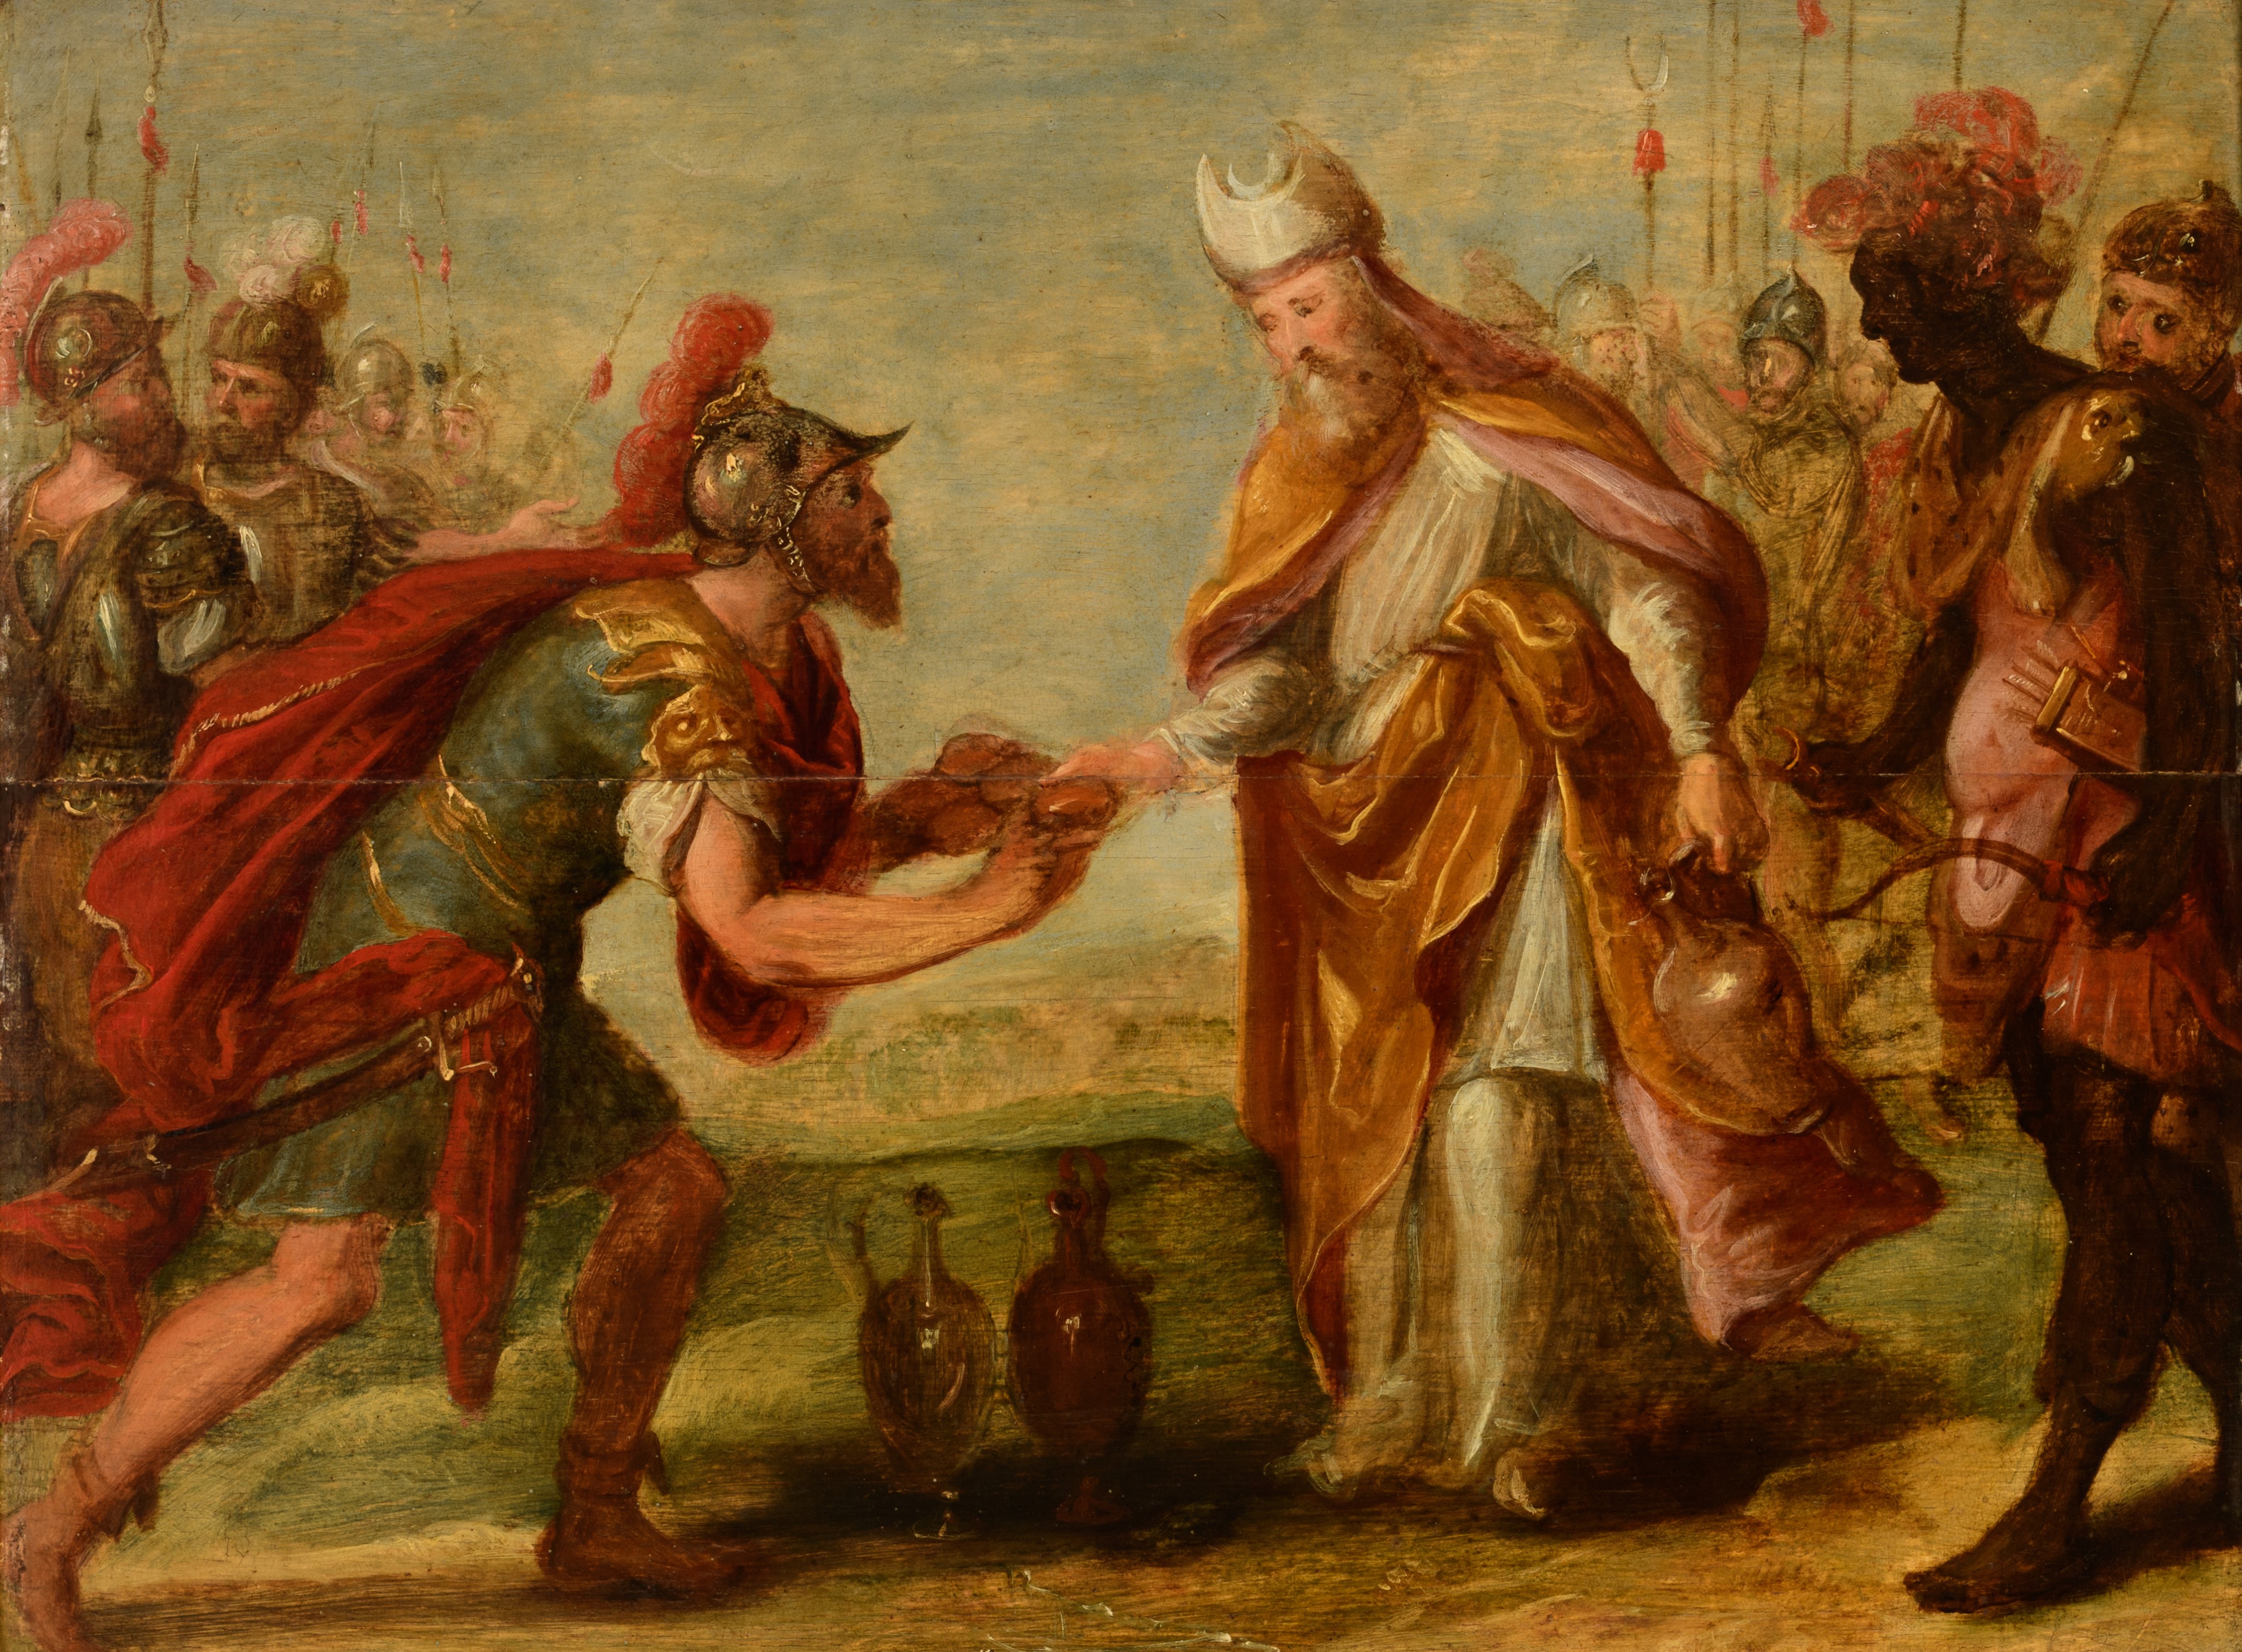 Antwerp School, 'Melchizedek and Abraham', 17thC, oil on panel, 48 x 64 cm